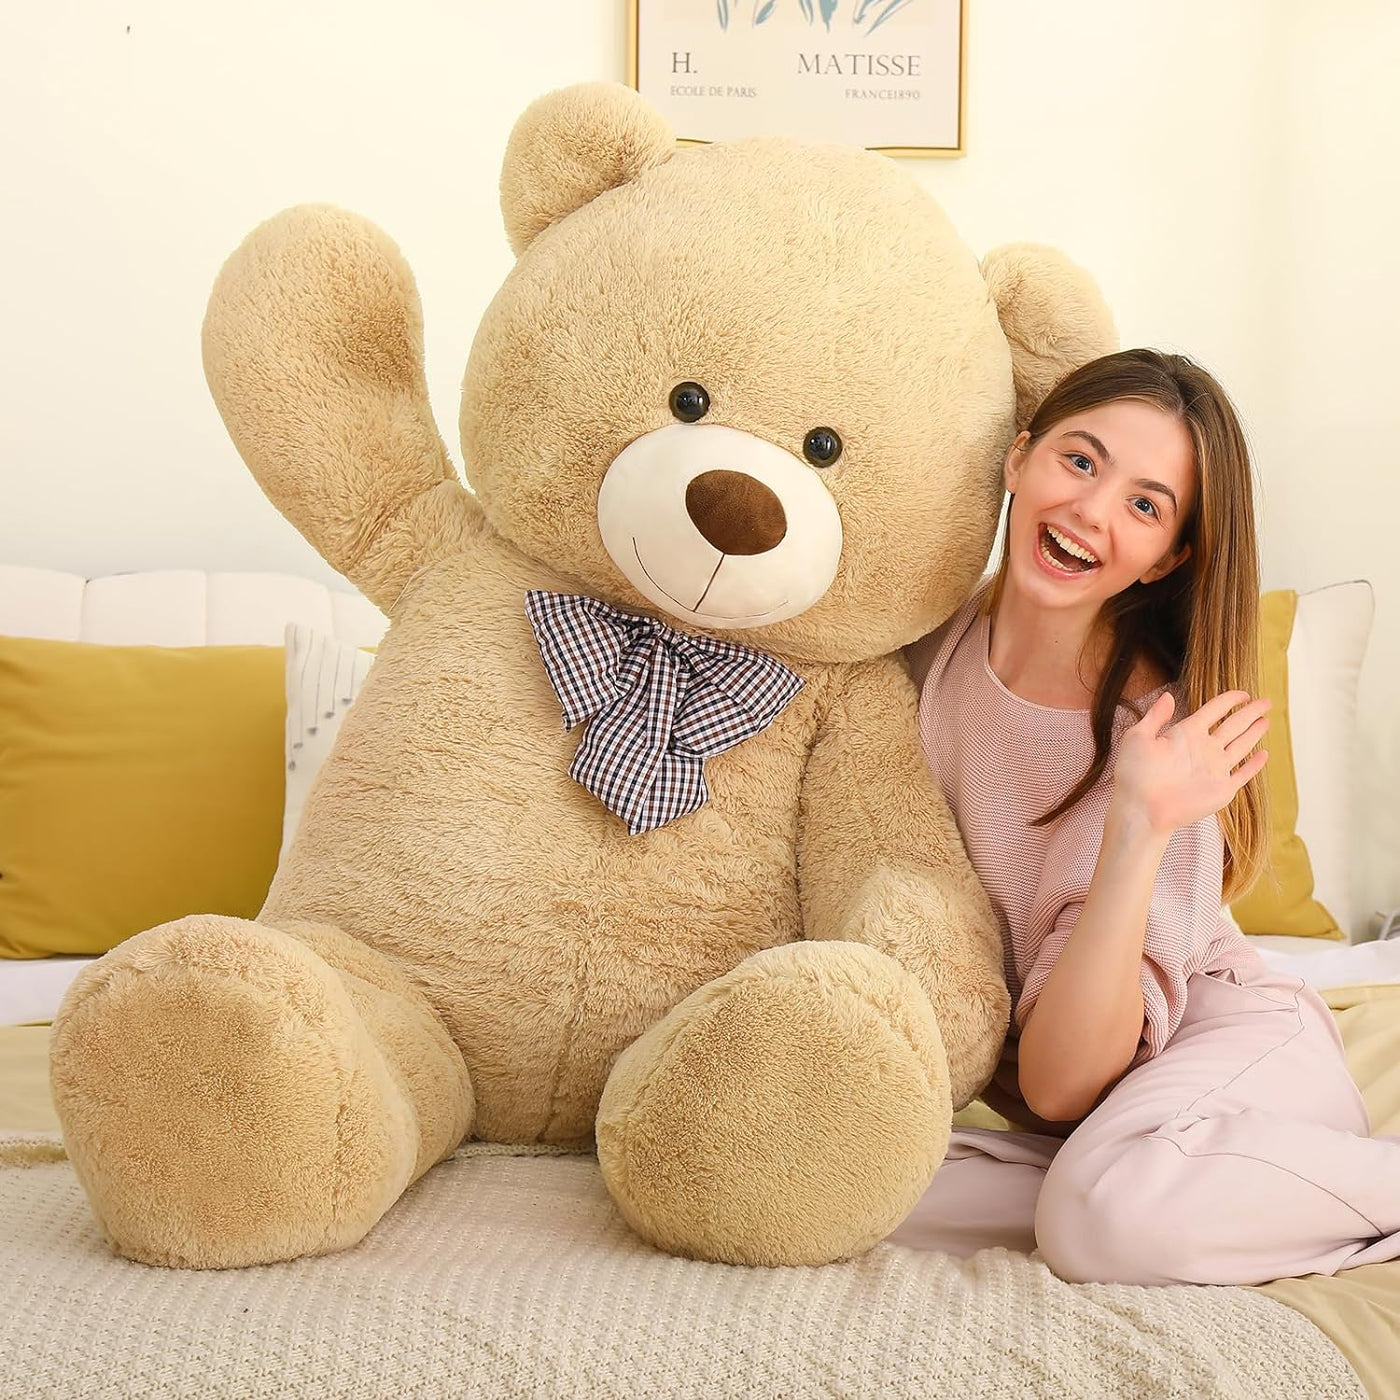 Giant Teddy Bear Stuffed Toy, Light Brown, 59 Inches - MorisMos Stuffed Animals